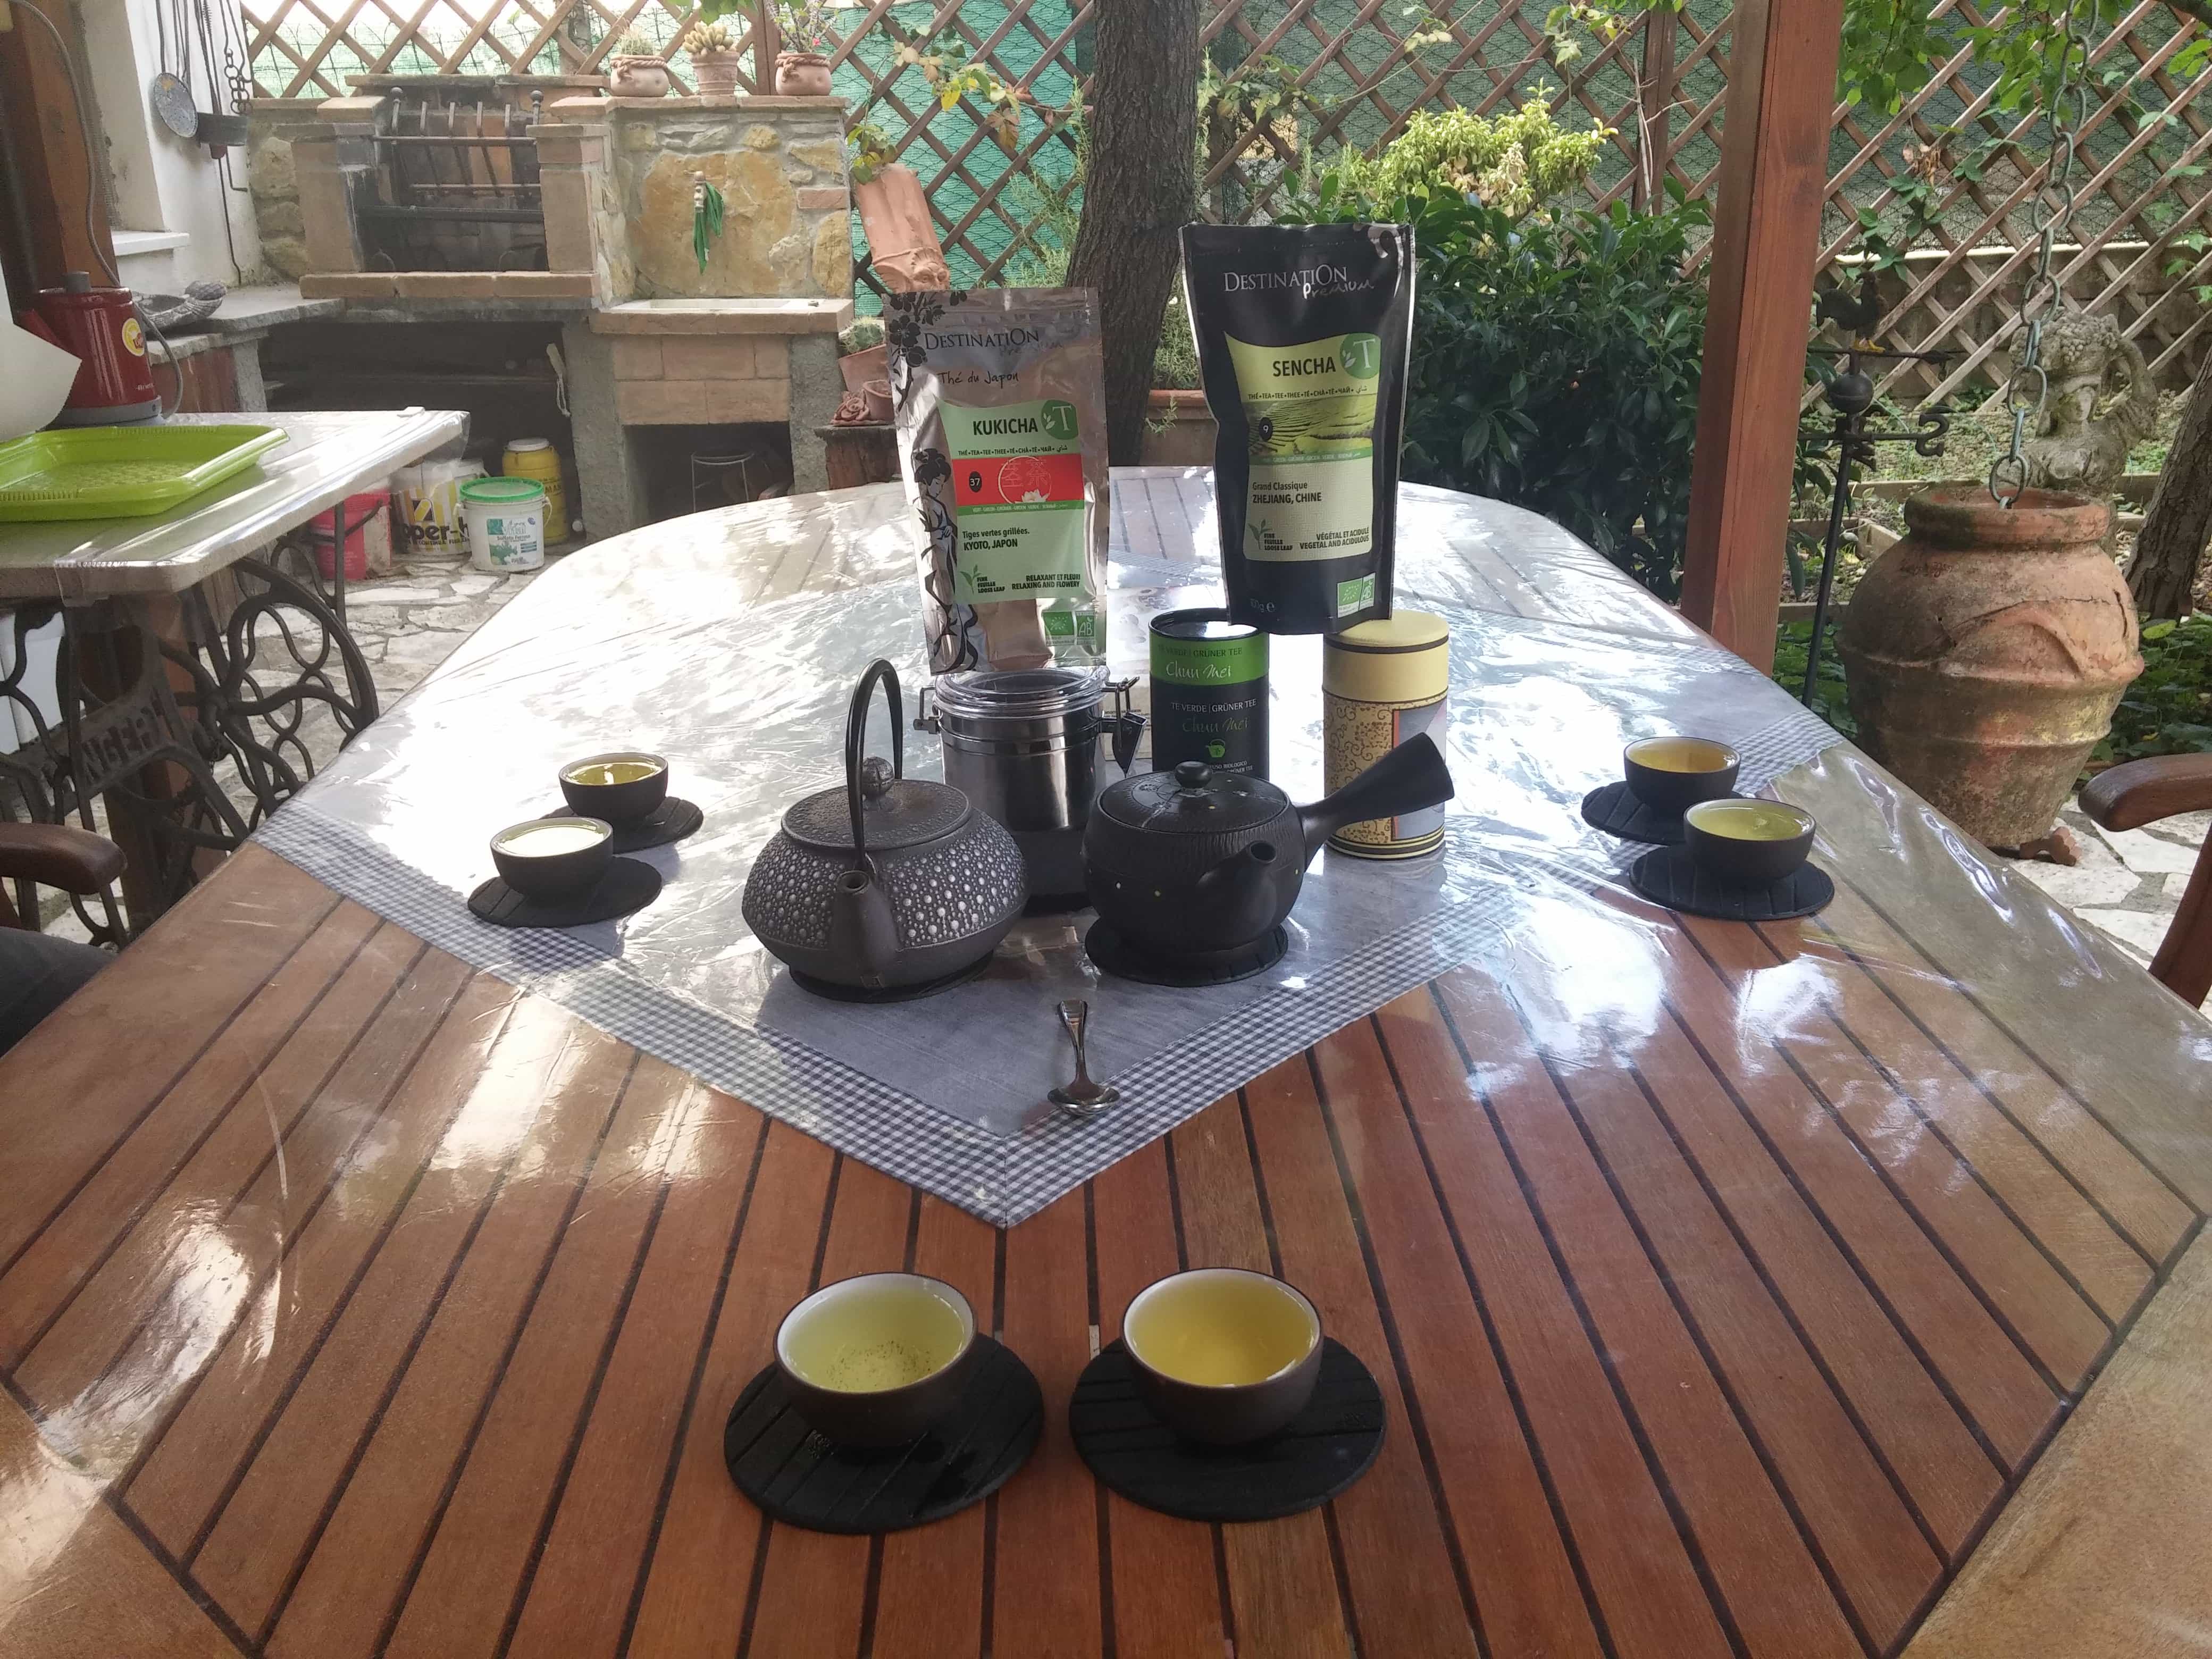 Degustazione di tè verde. Ognuno dei 3 degustatori ha 2 tazzine da assaggiare: in quella a sinistra c'è del kukicha, mentre in quella a destra c'è il sencha cinese.